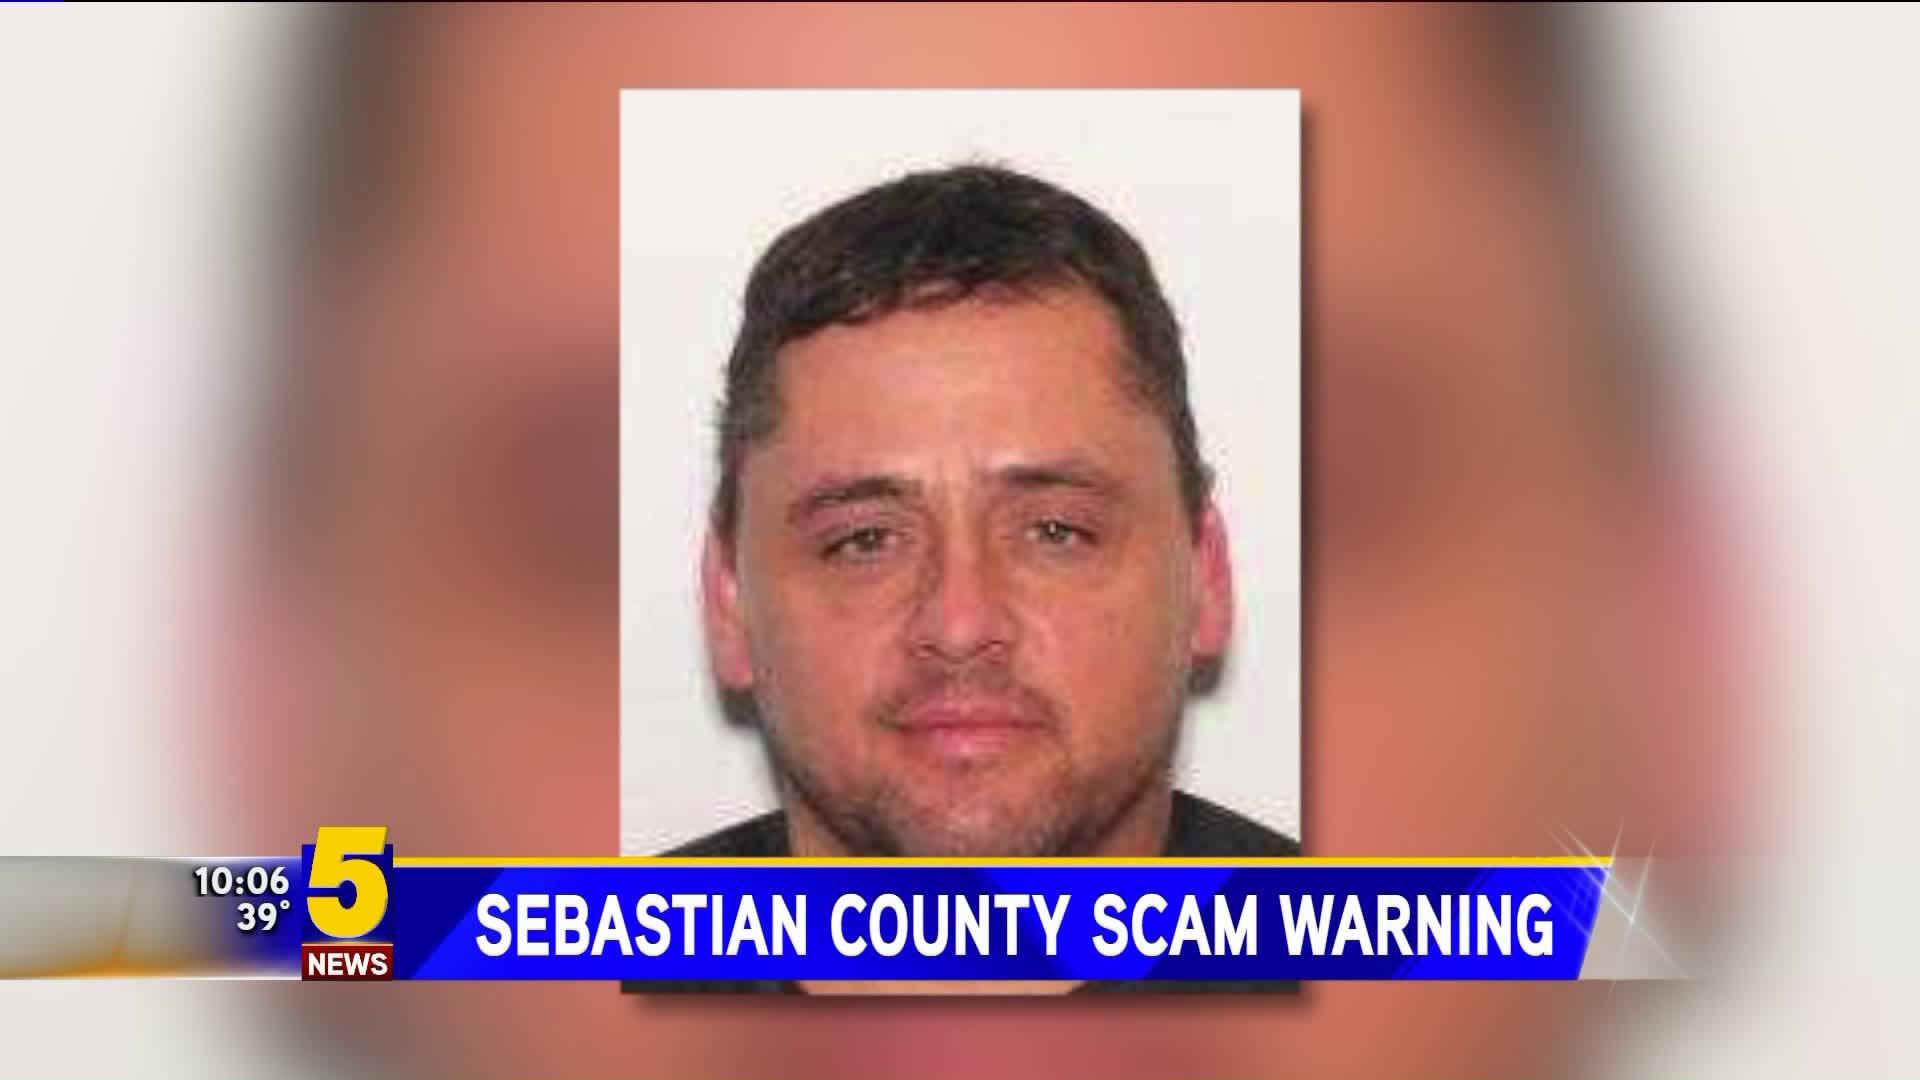 Sebastian County Scam Warning